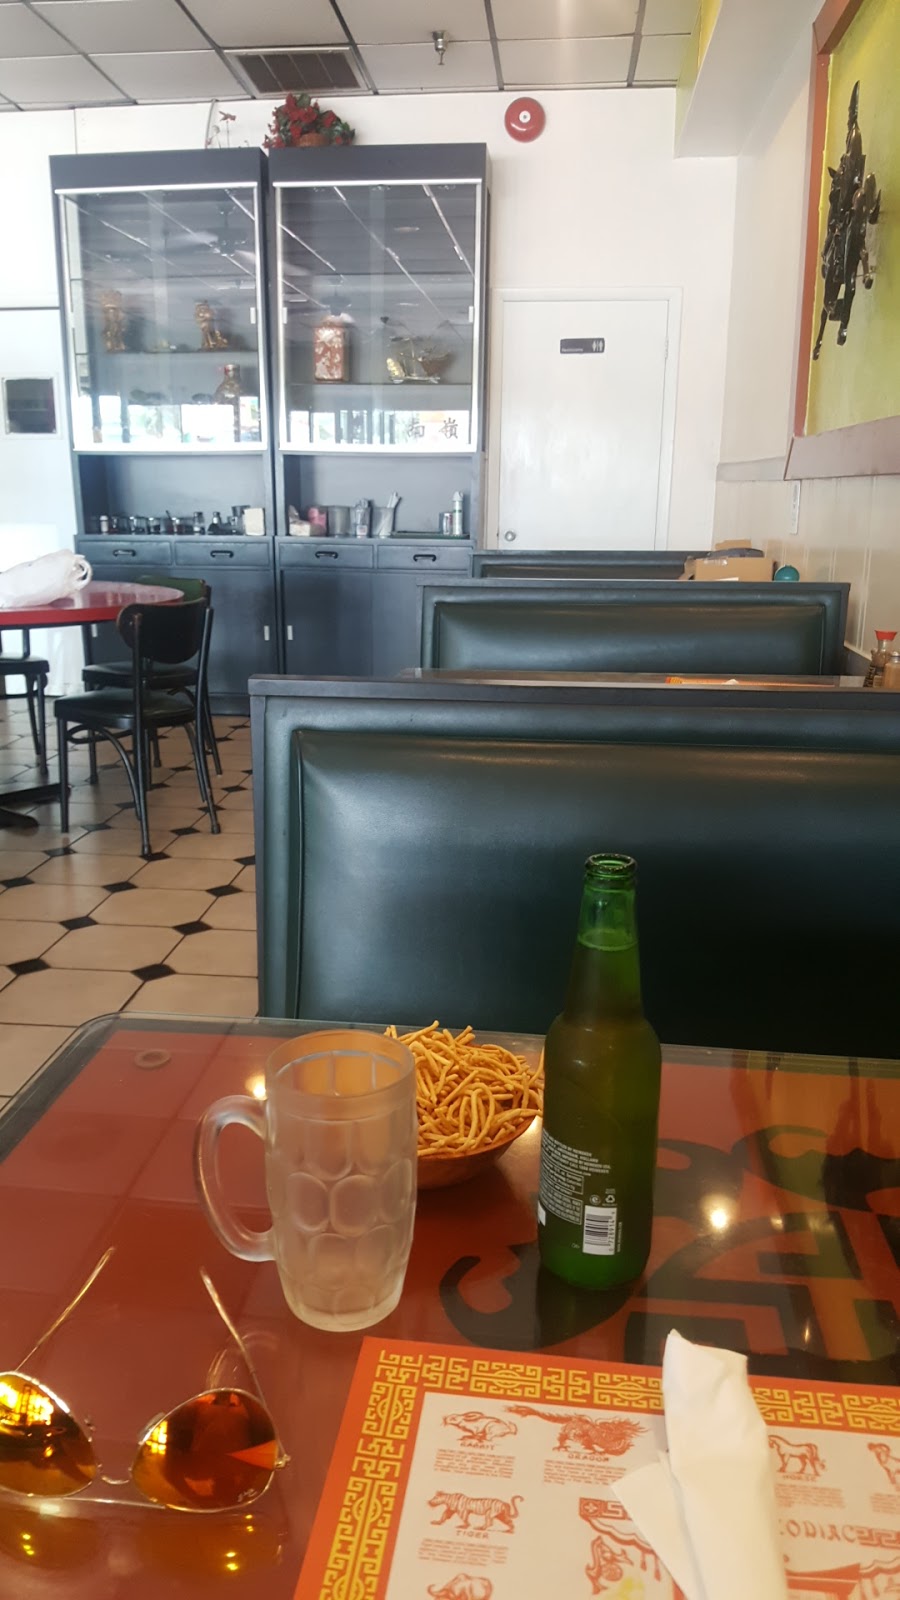 El Cantones Chinese Restaurant | 11865 SW 26th St, Miami, FL 33175, USA | Phone: (305) 559-8999